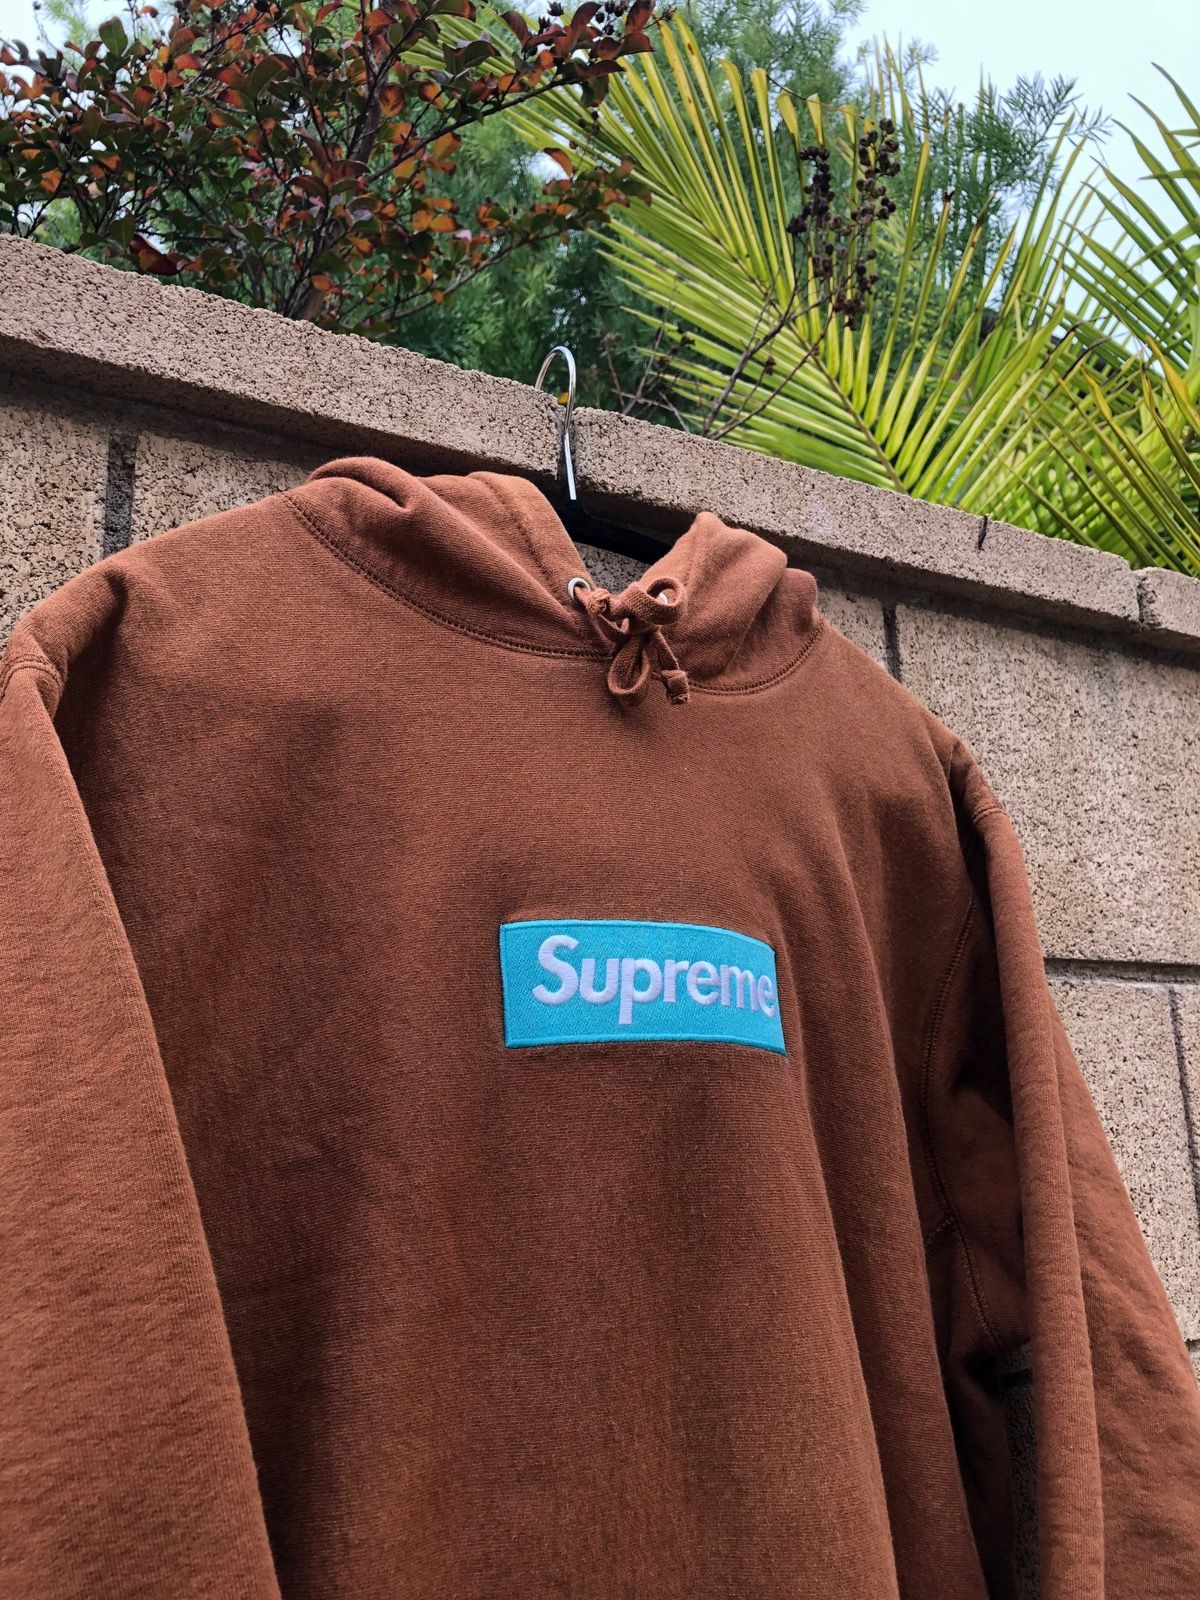 Supreme Supreme Rust Box Logo Hoodie - Brown